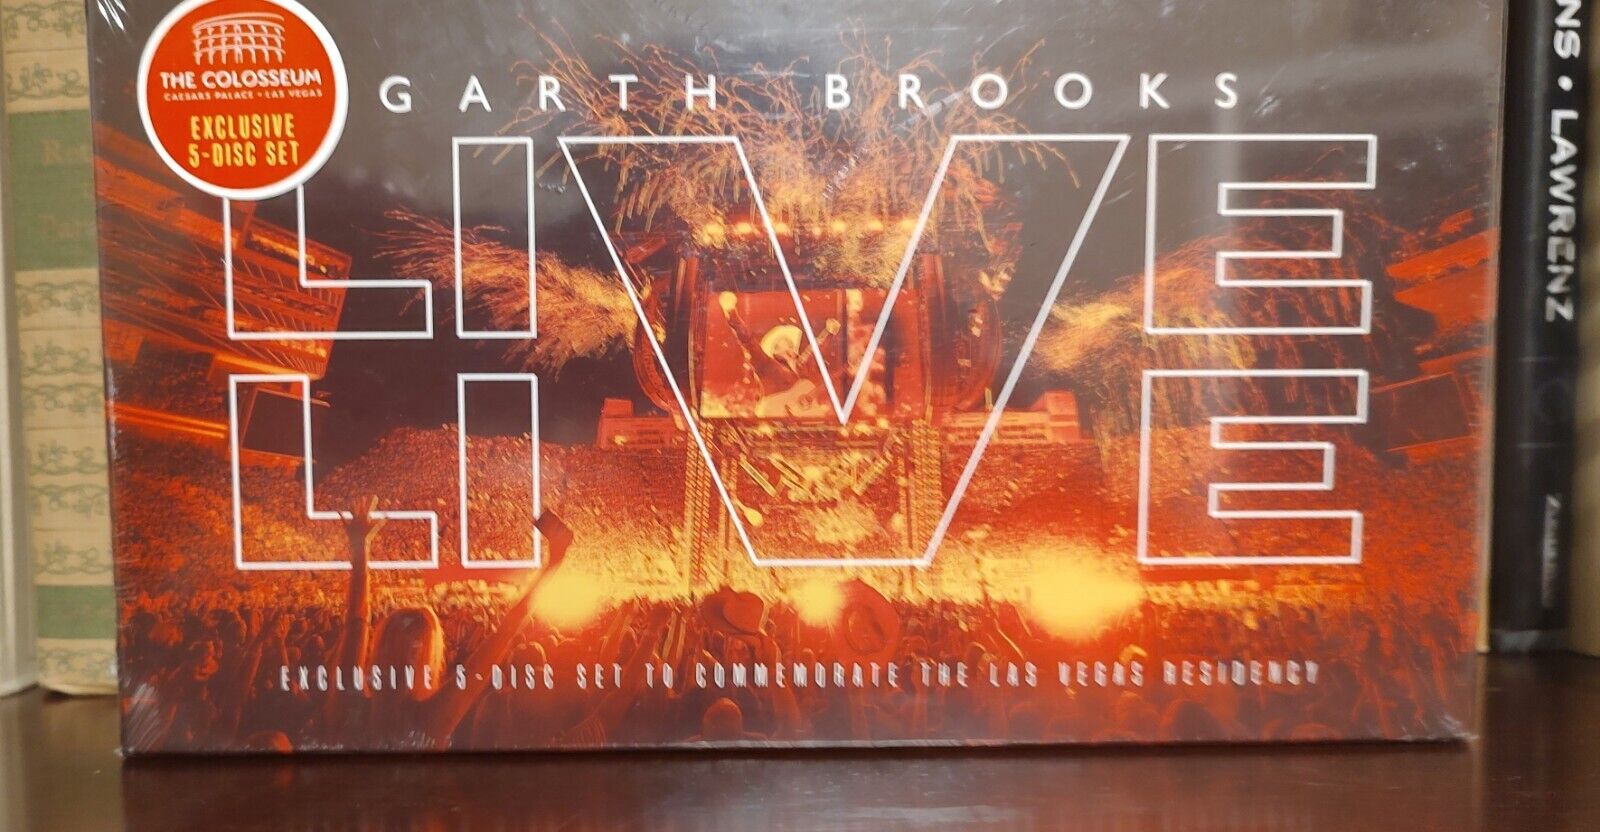 GARTH BROOKS LIVE 5 DISC SET TO COMMEMORATE THE LAS VEGAS RESIDENCY